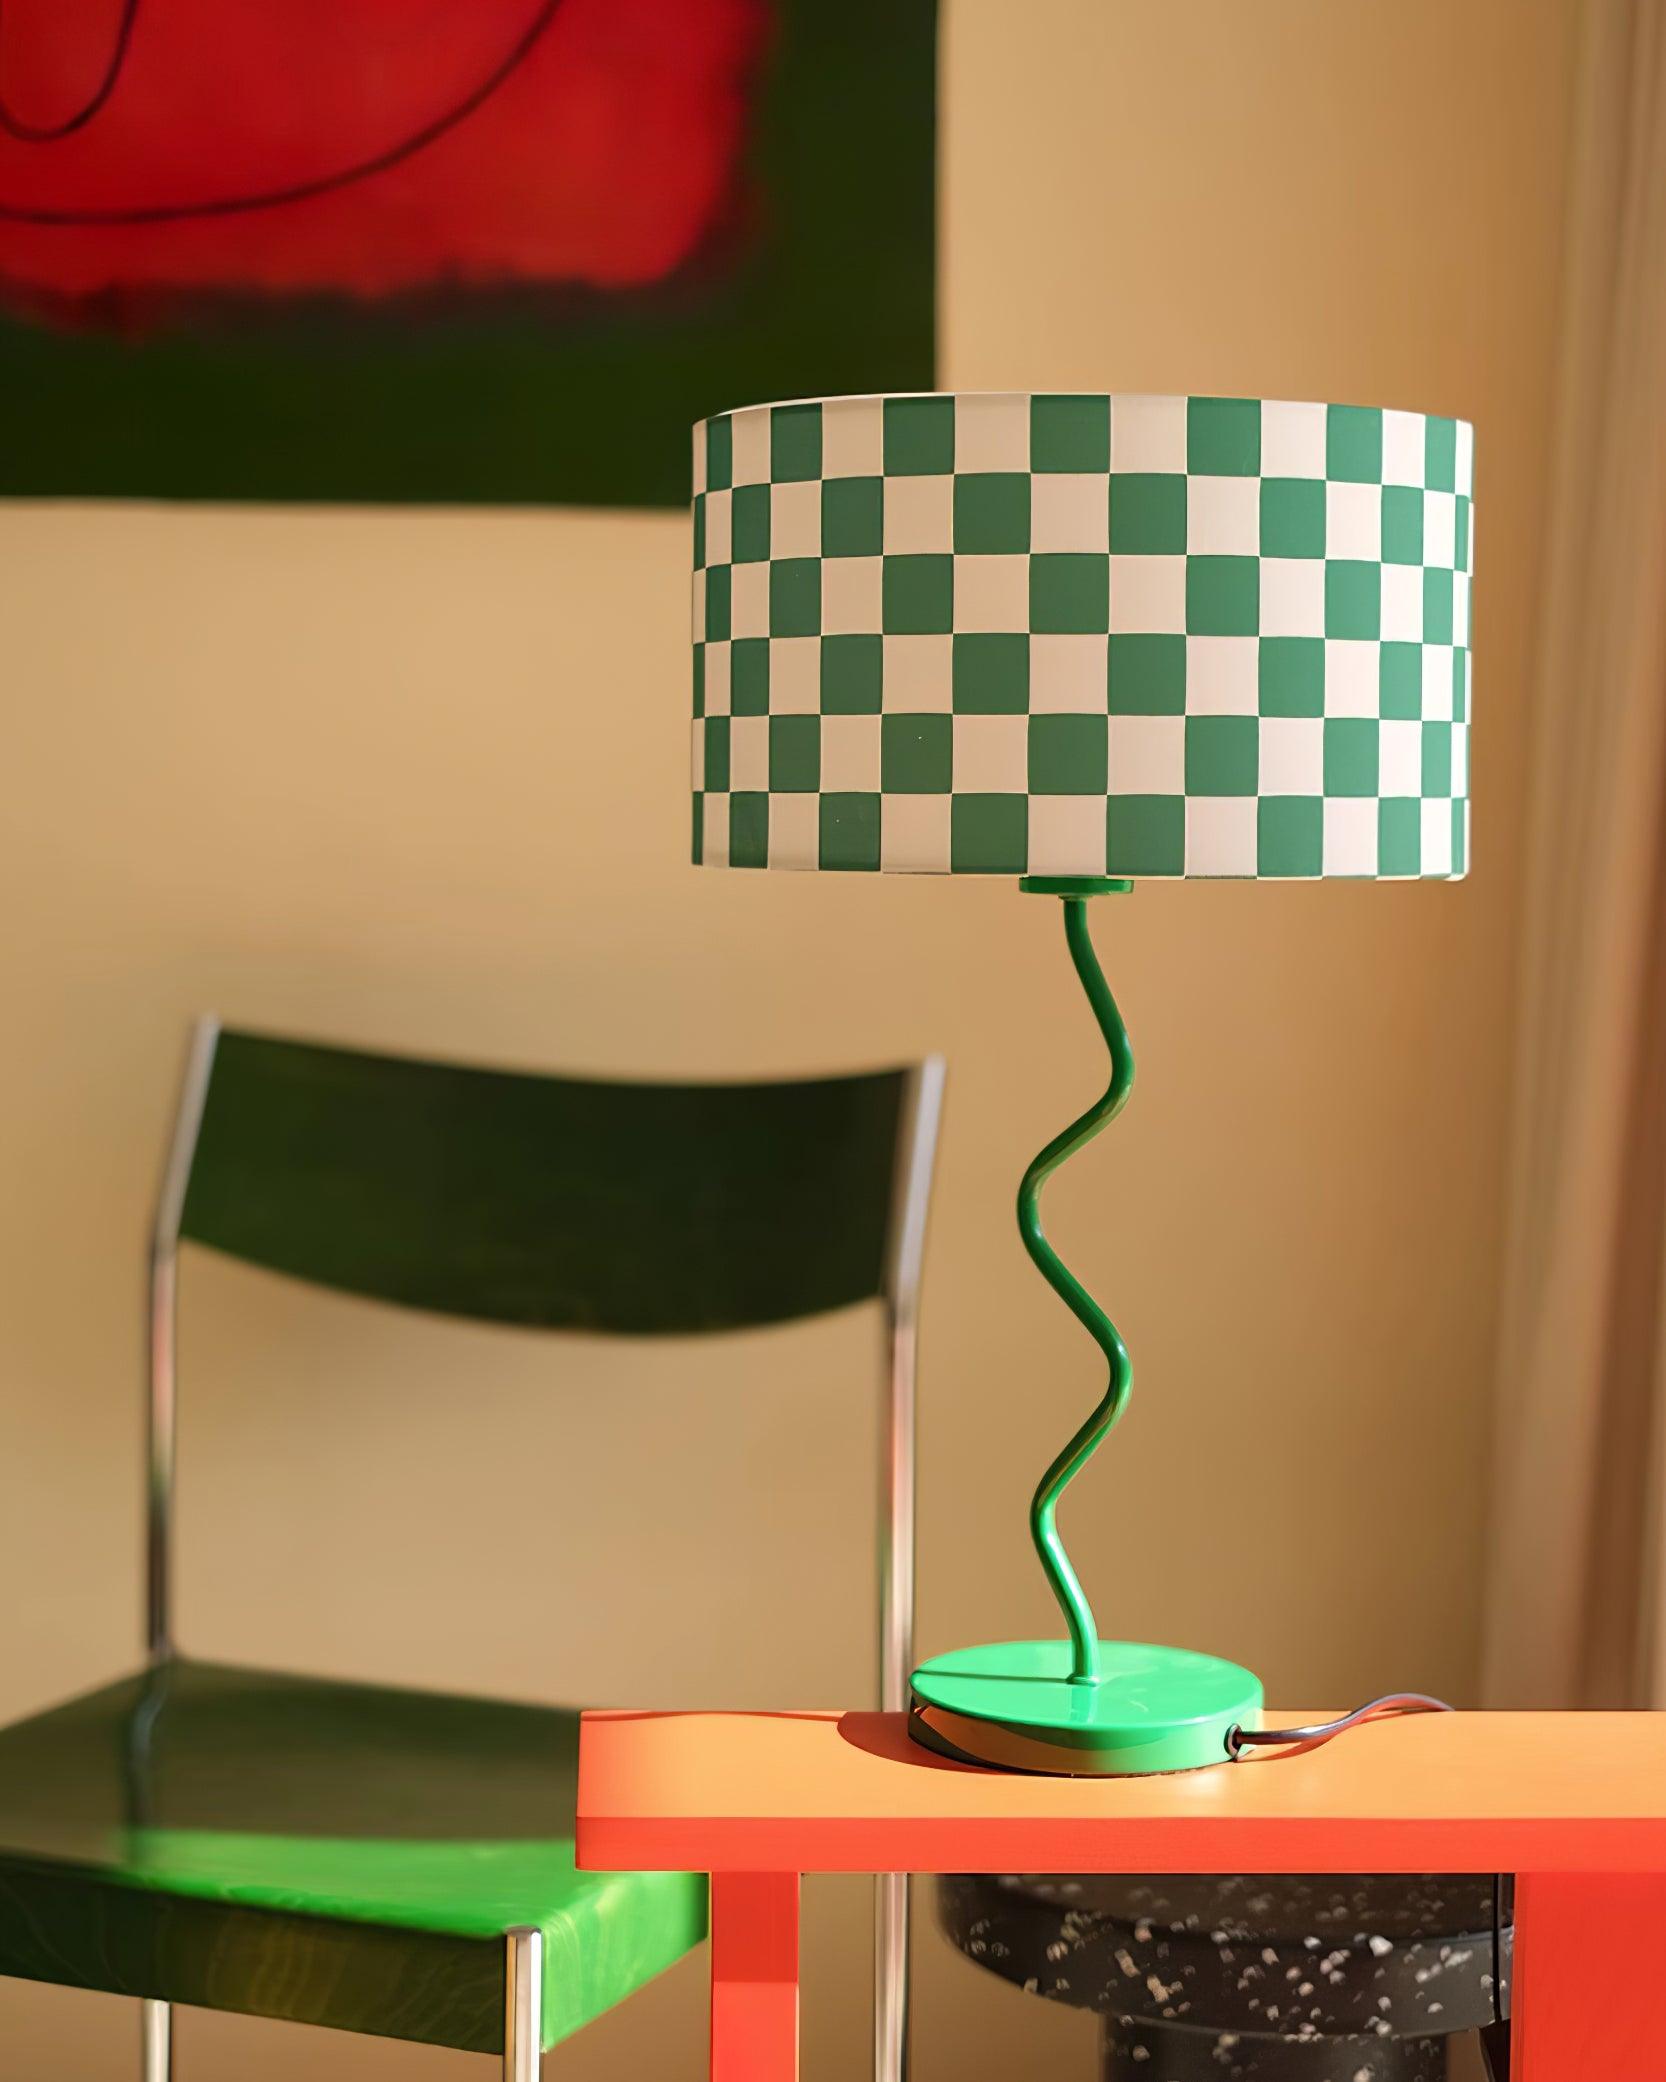 Green Chessboard Table Lamp 11.8″- 19.6″ - Docos